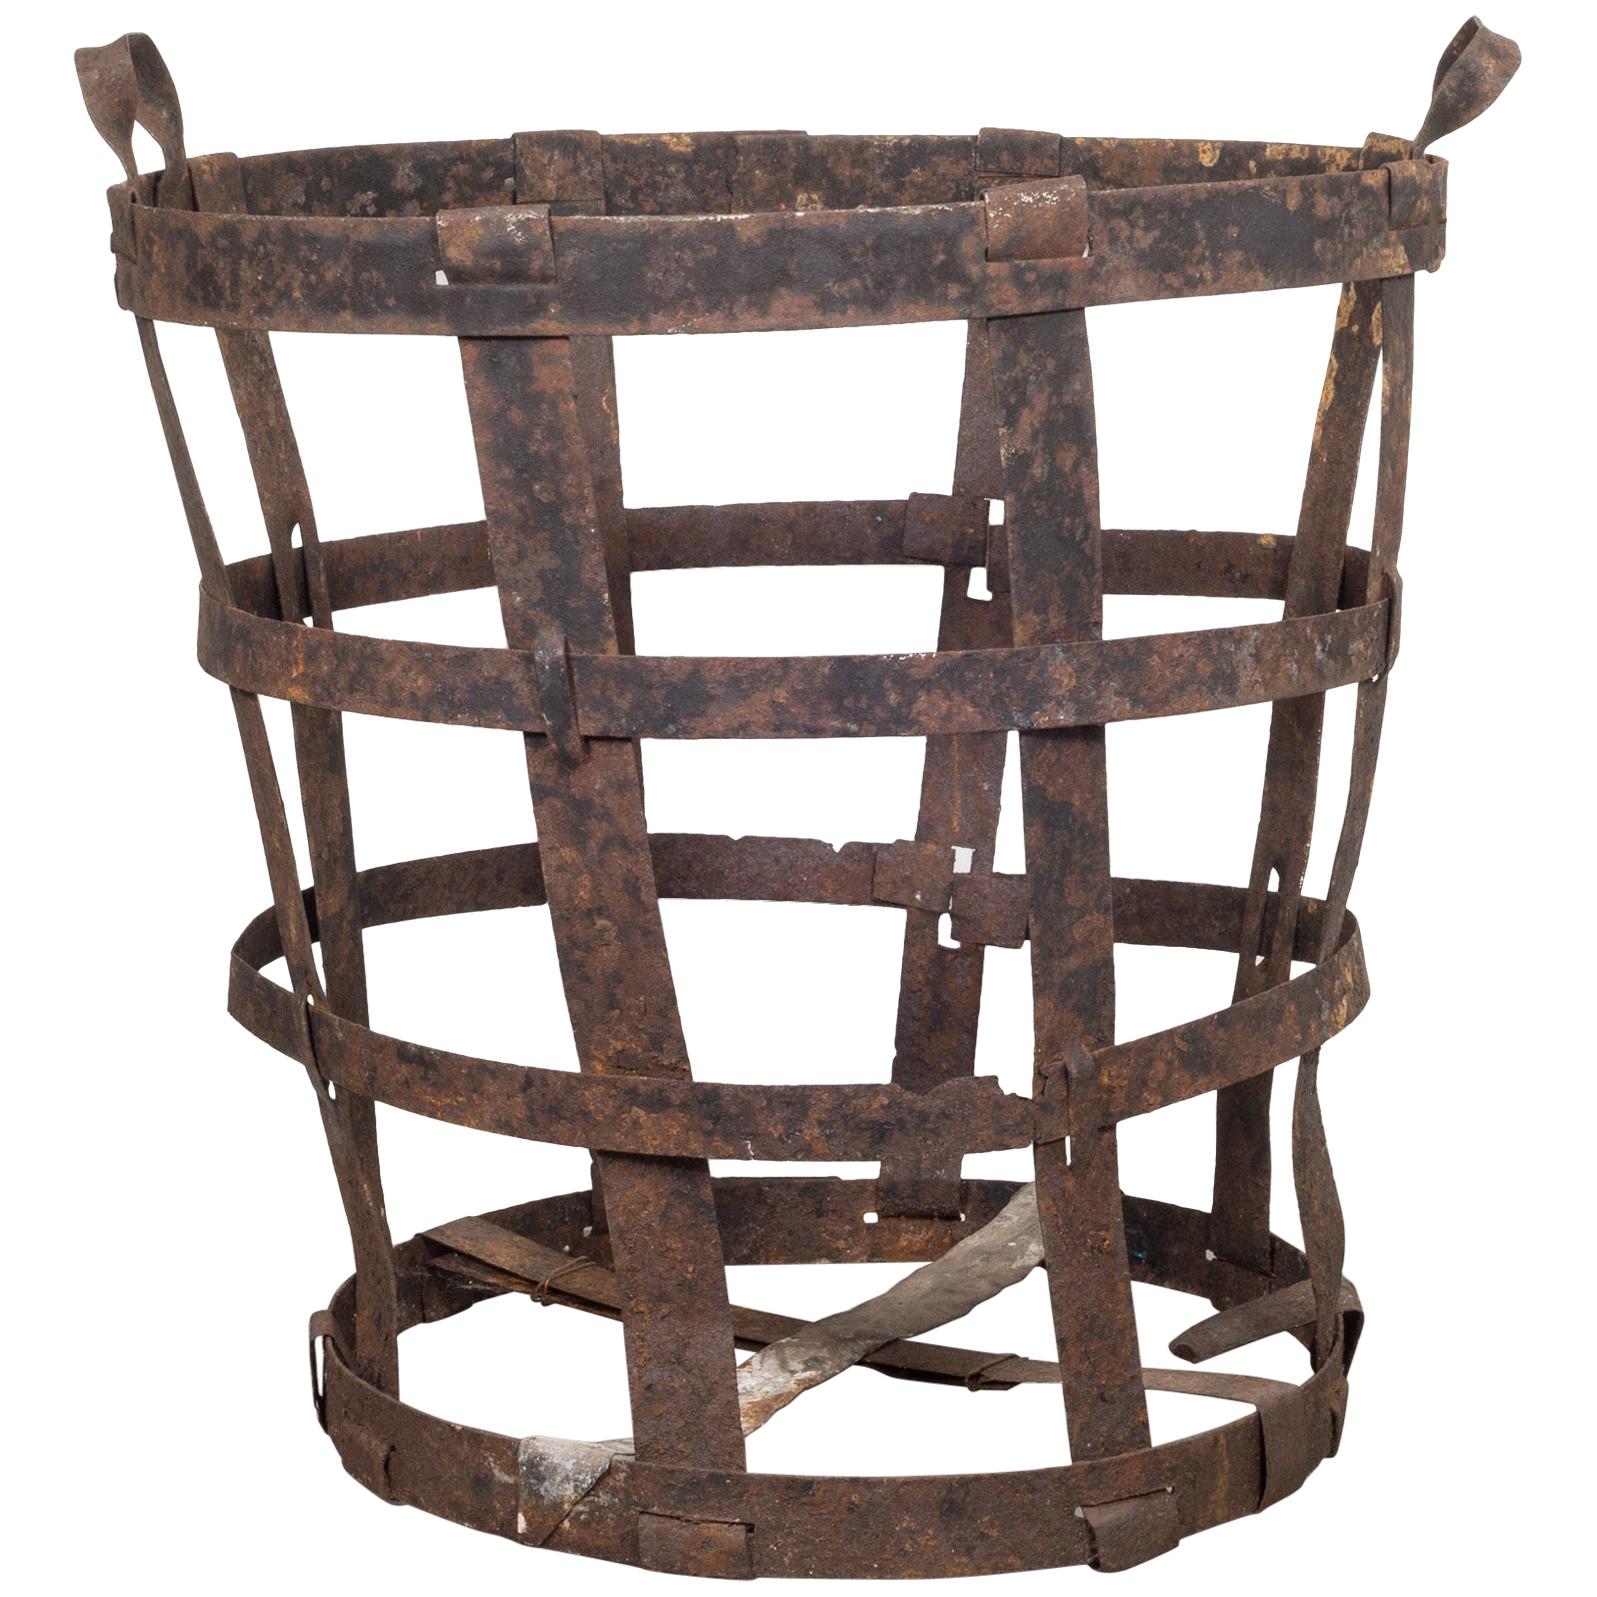 Antique Factory Steel Band Basket, c.1880-1920